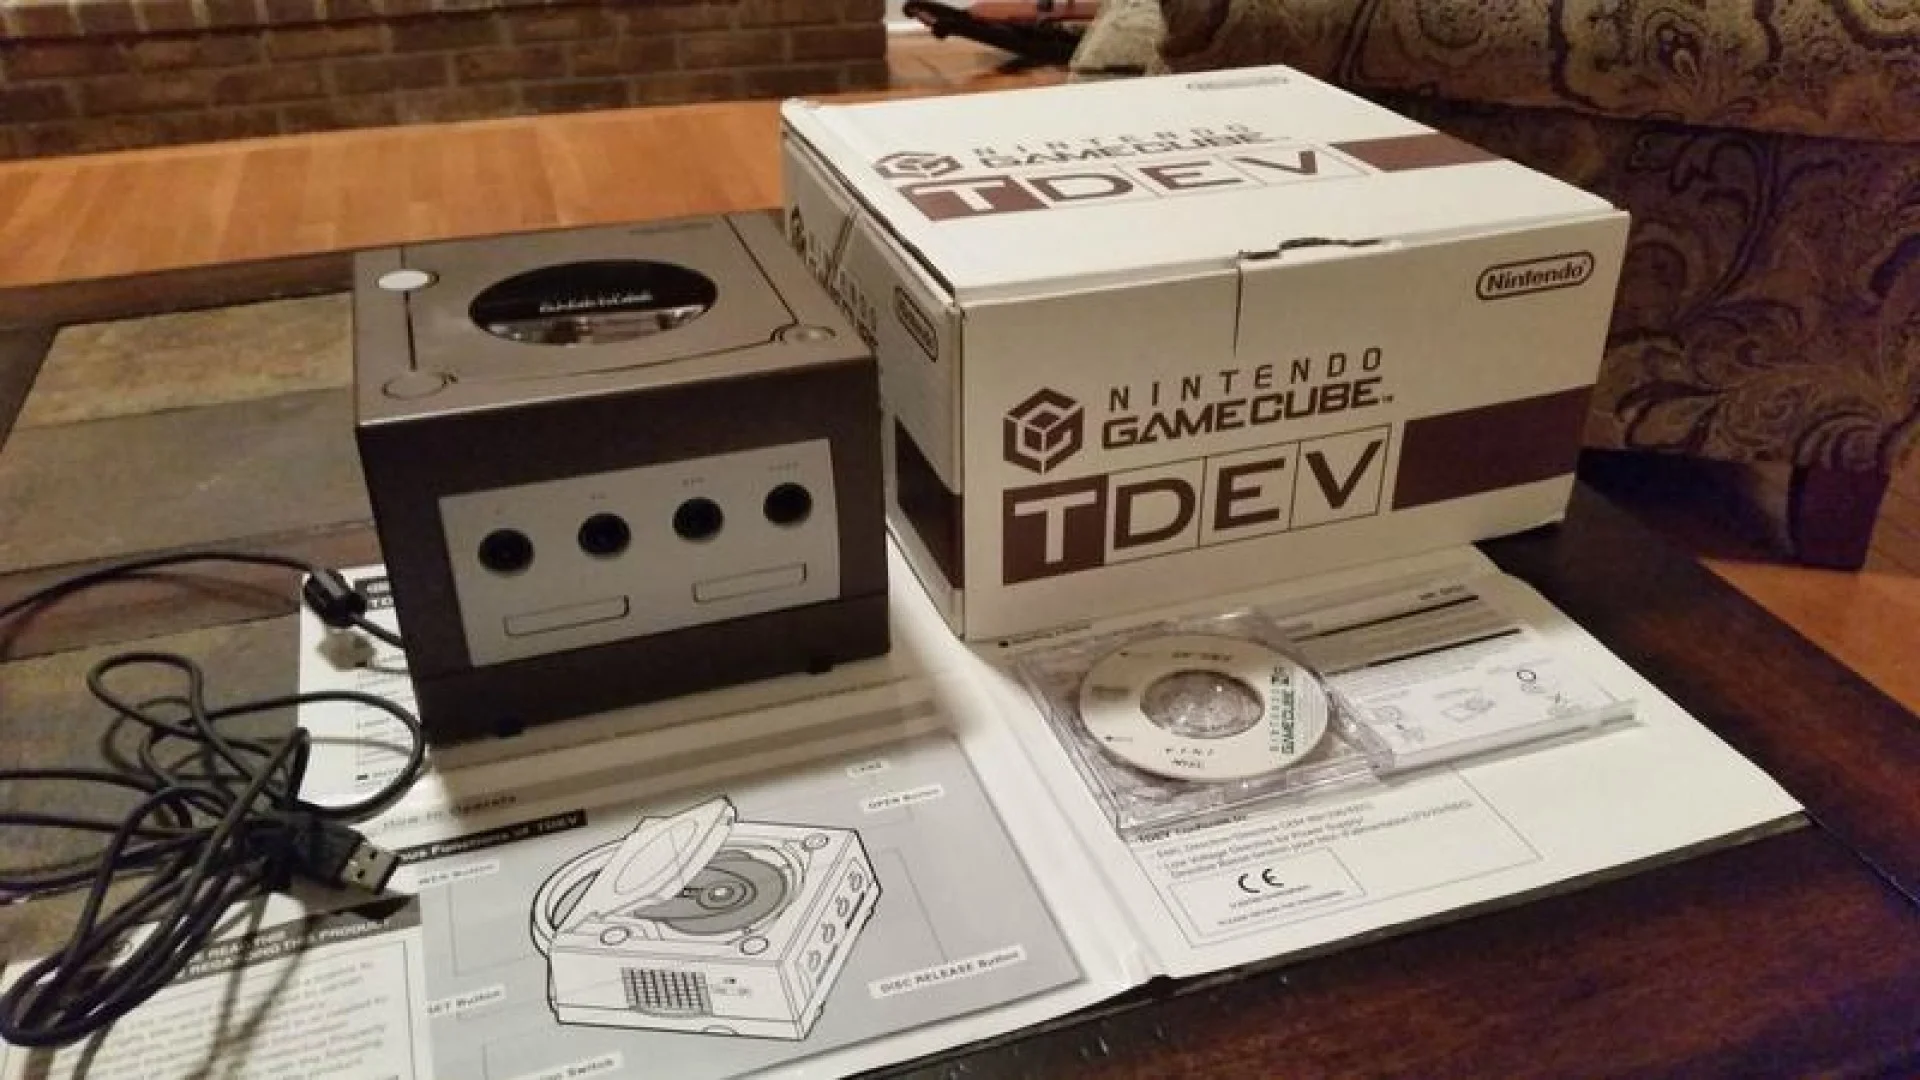  Nintendo GameCube TDEV Console